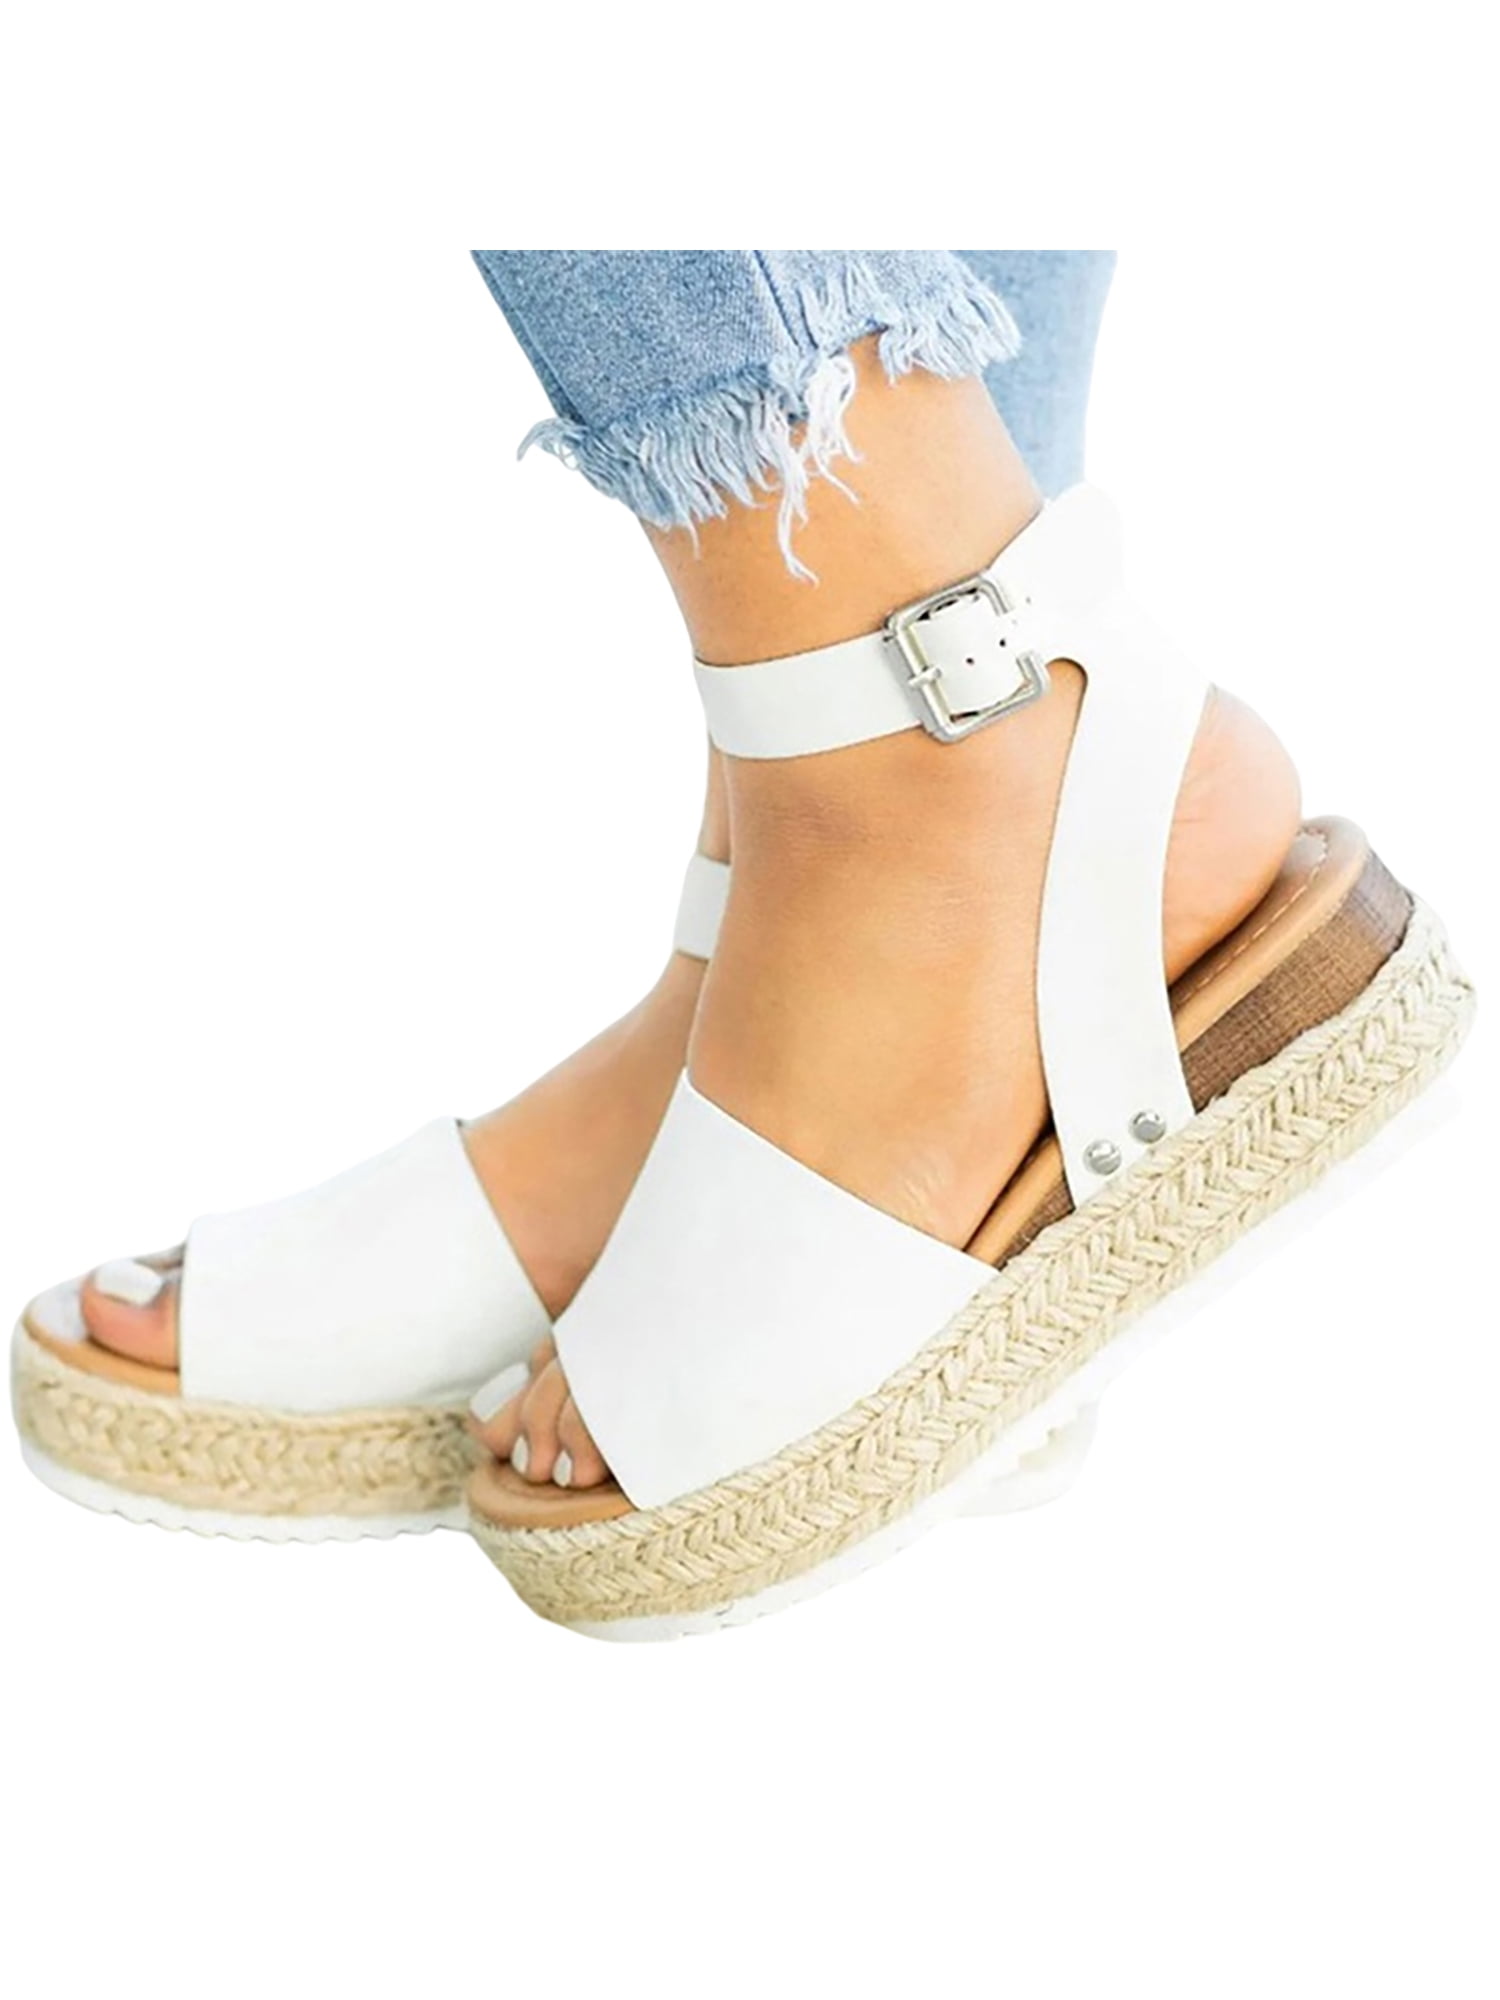 Details about   Lady Summer Sandal Platform Wedges Cork Espadrille Open Toe Outdoor Casual Shoes 